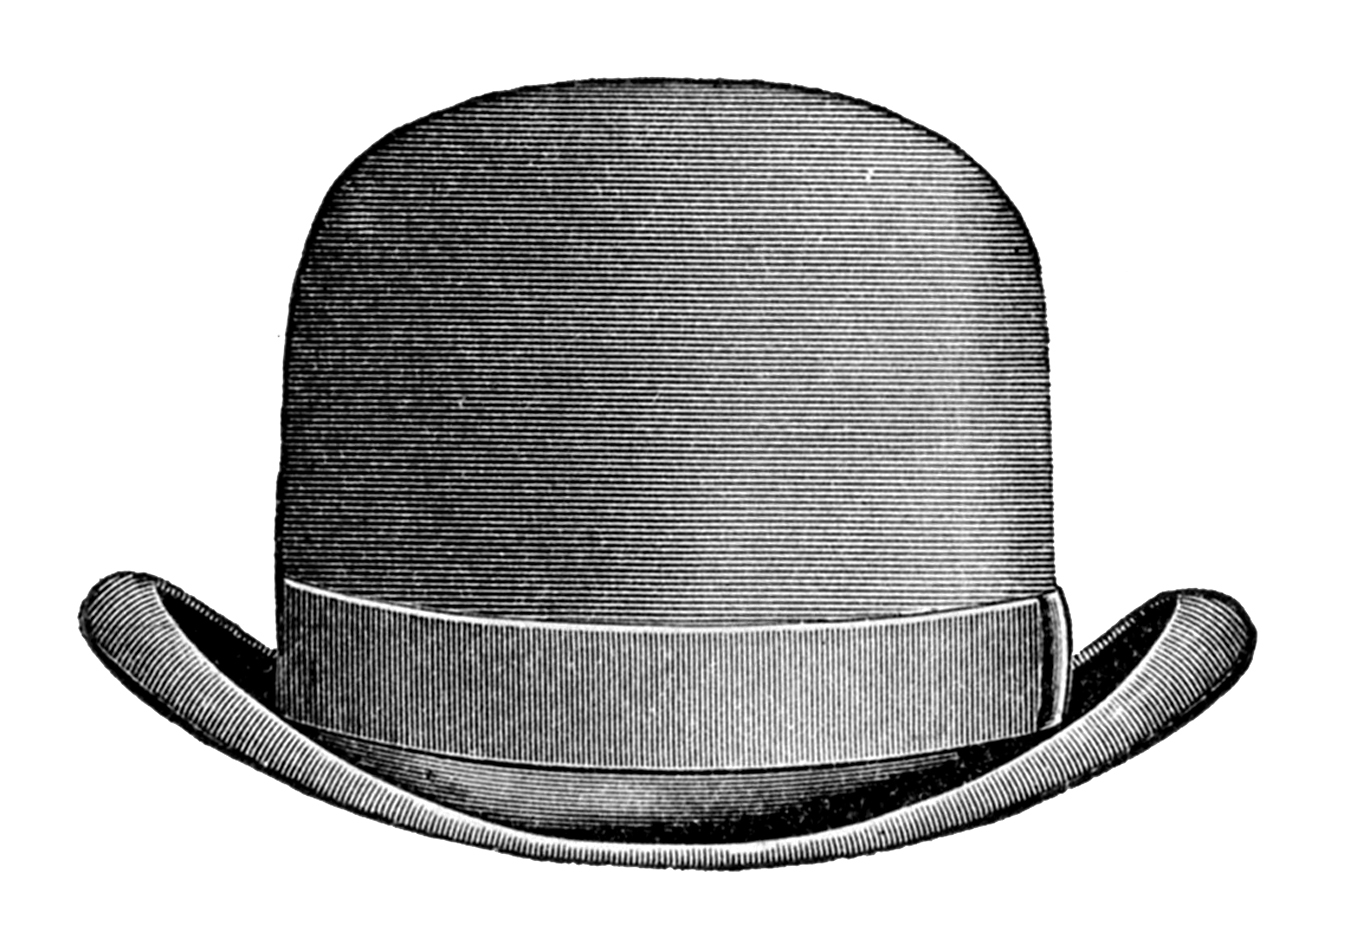 free clipart vintage hats - photo #33